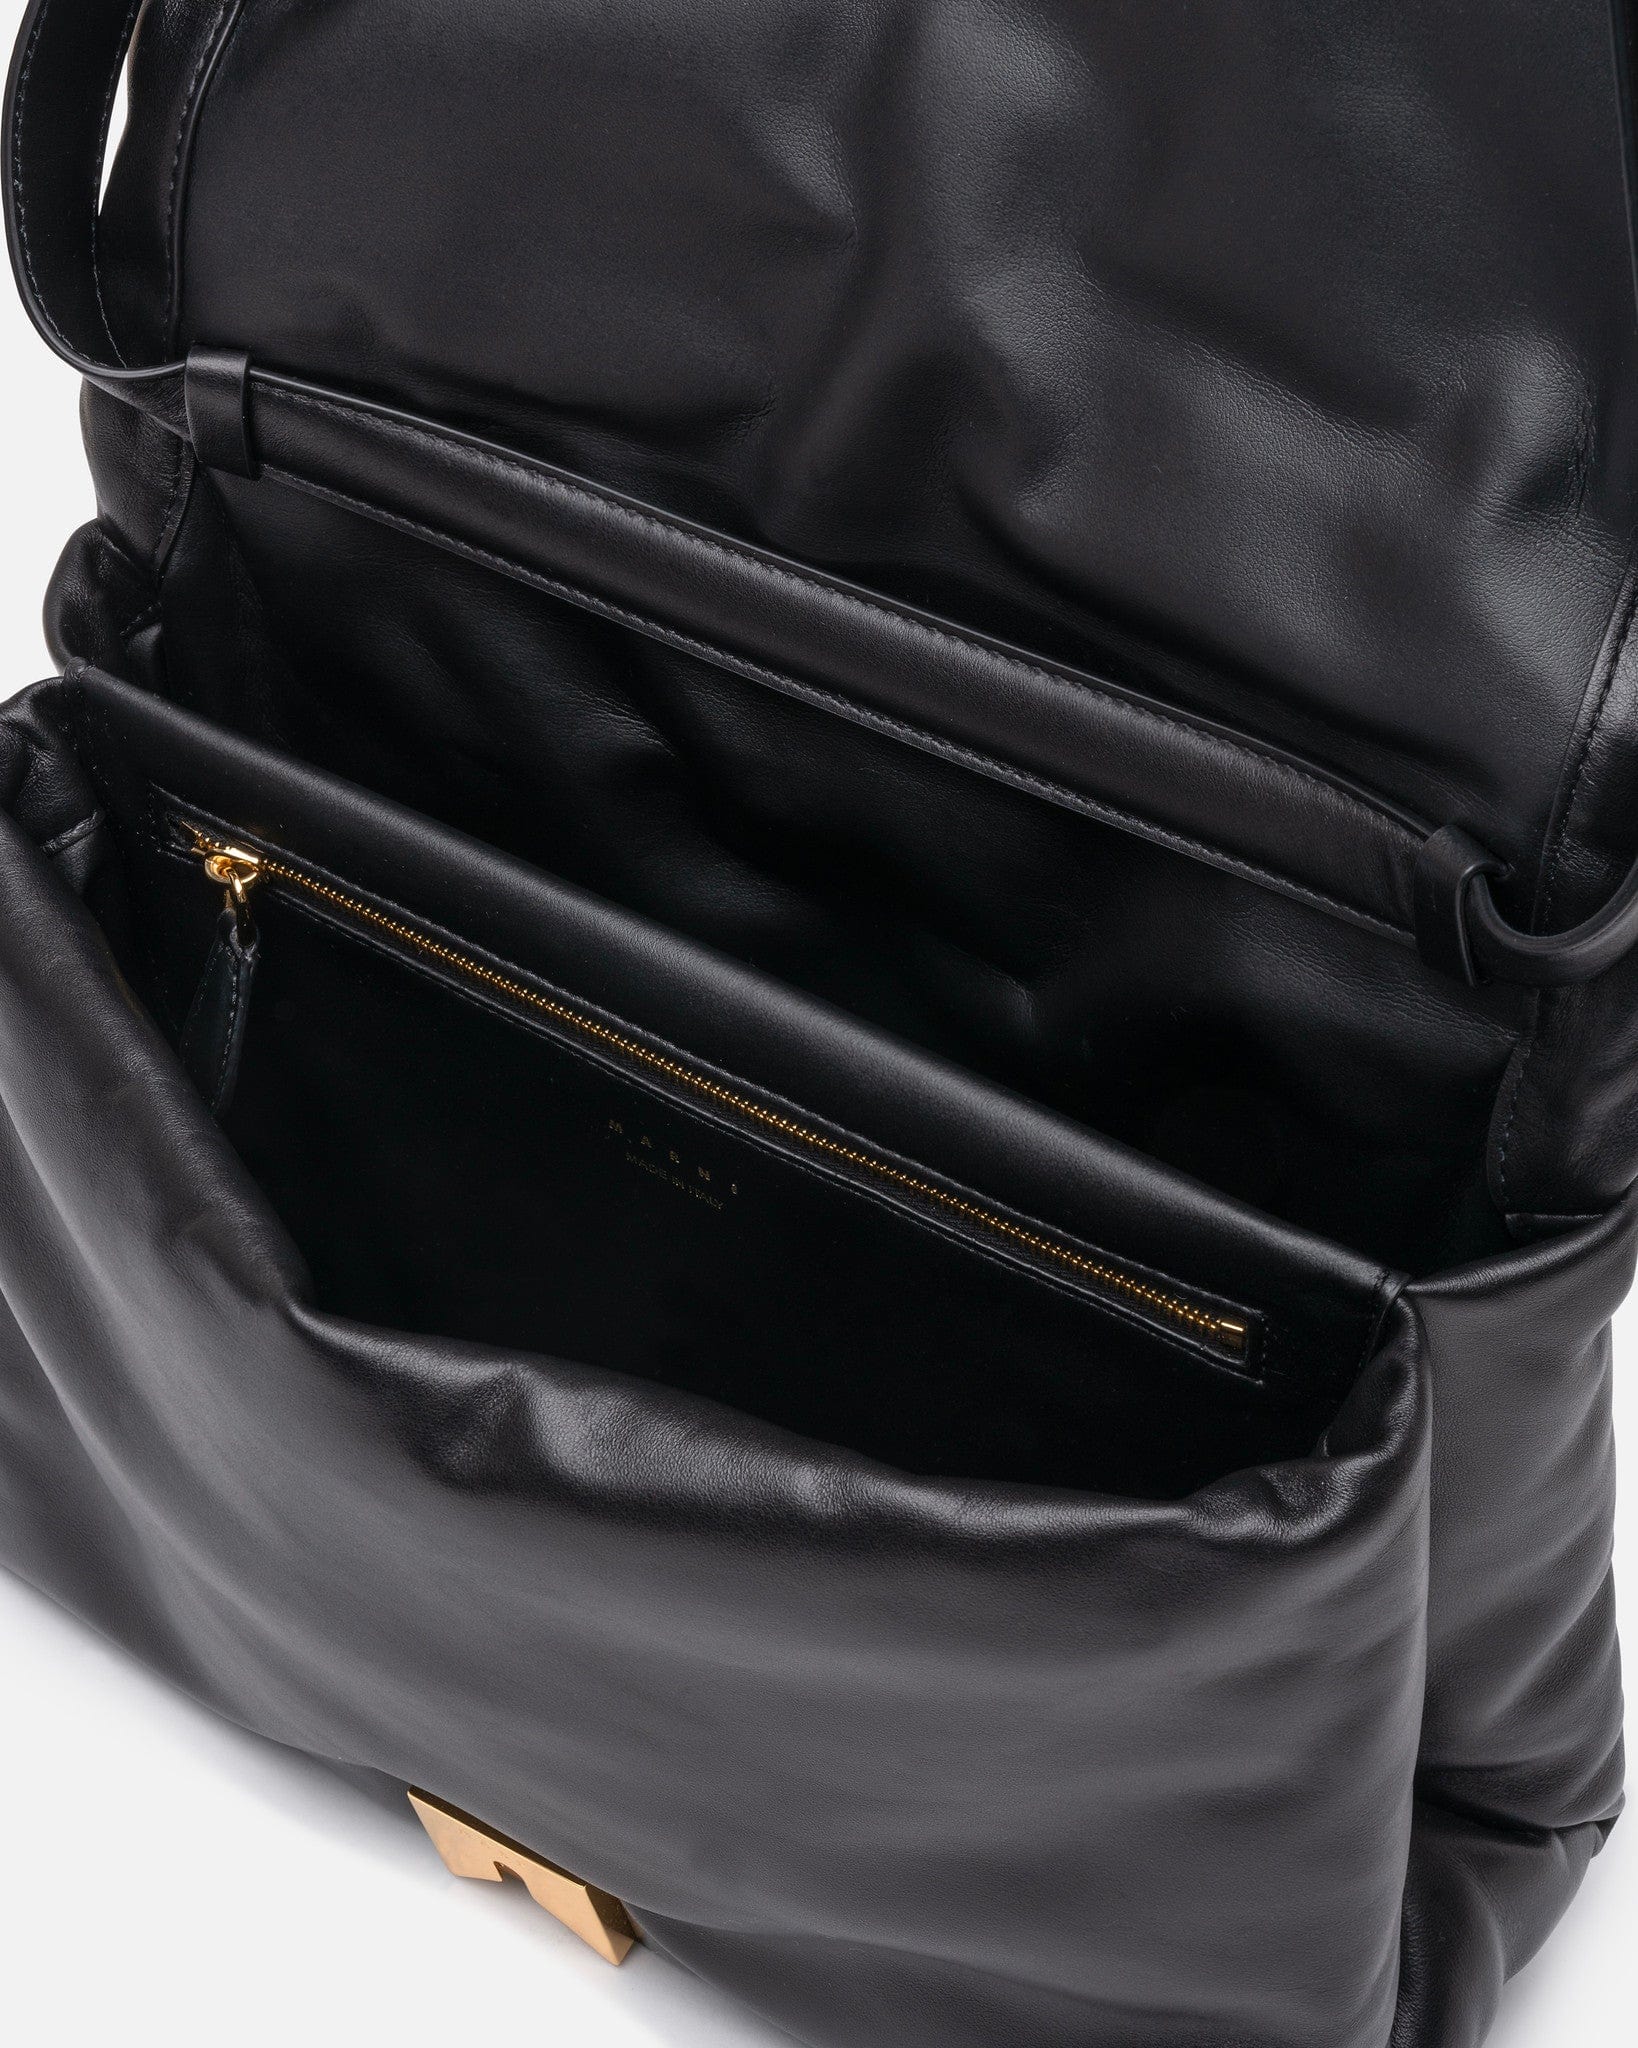 Marni Women Bags Large Prism Bag in Black